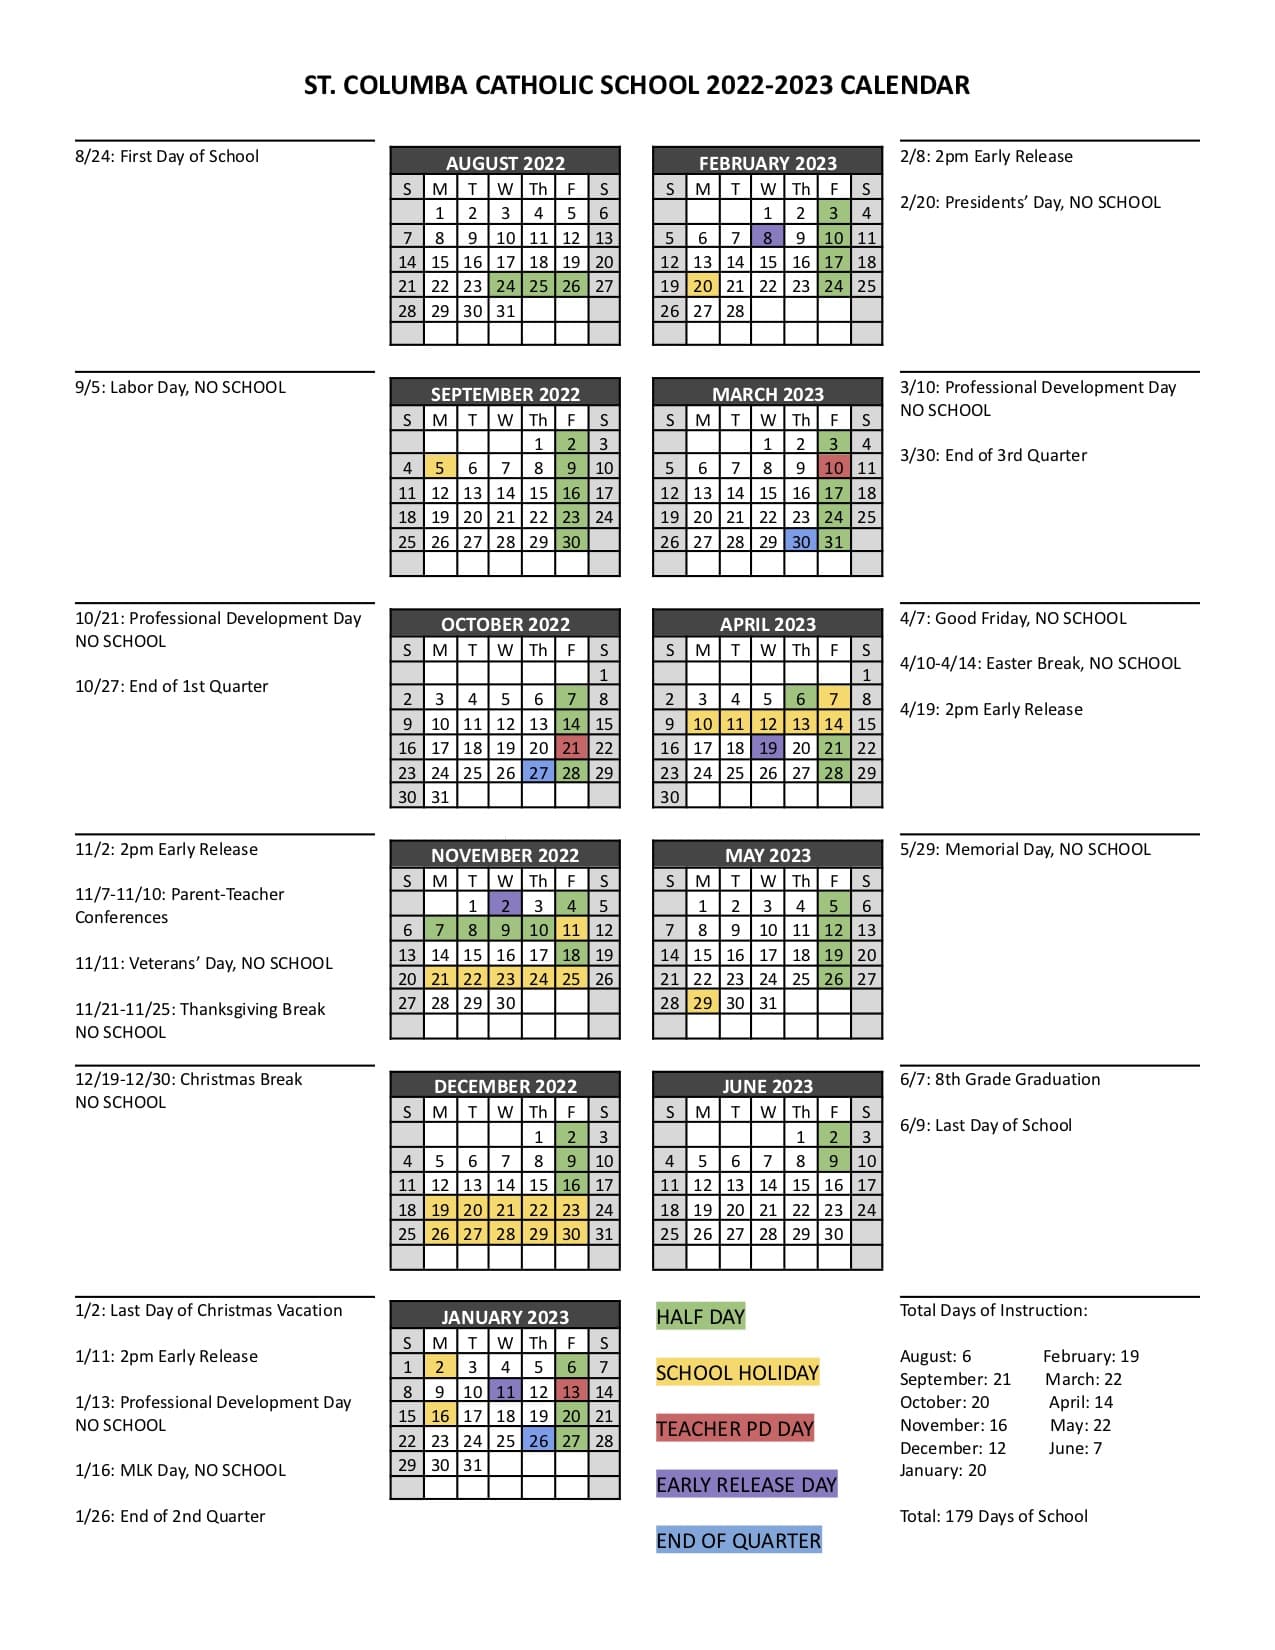 Master Calendar – St. Columba Catholic School